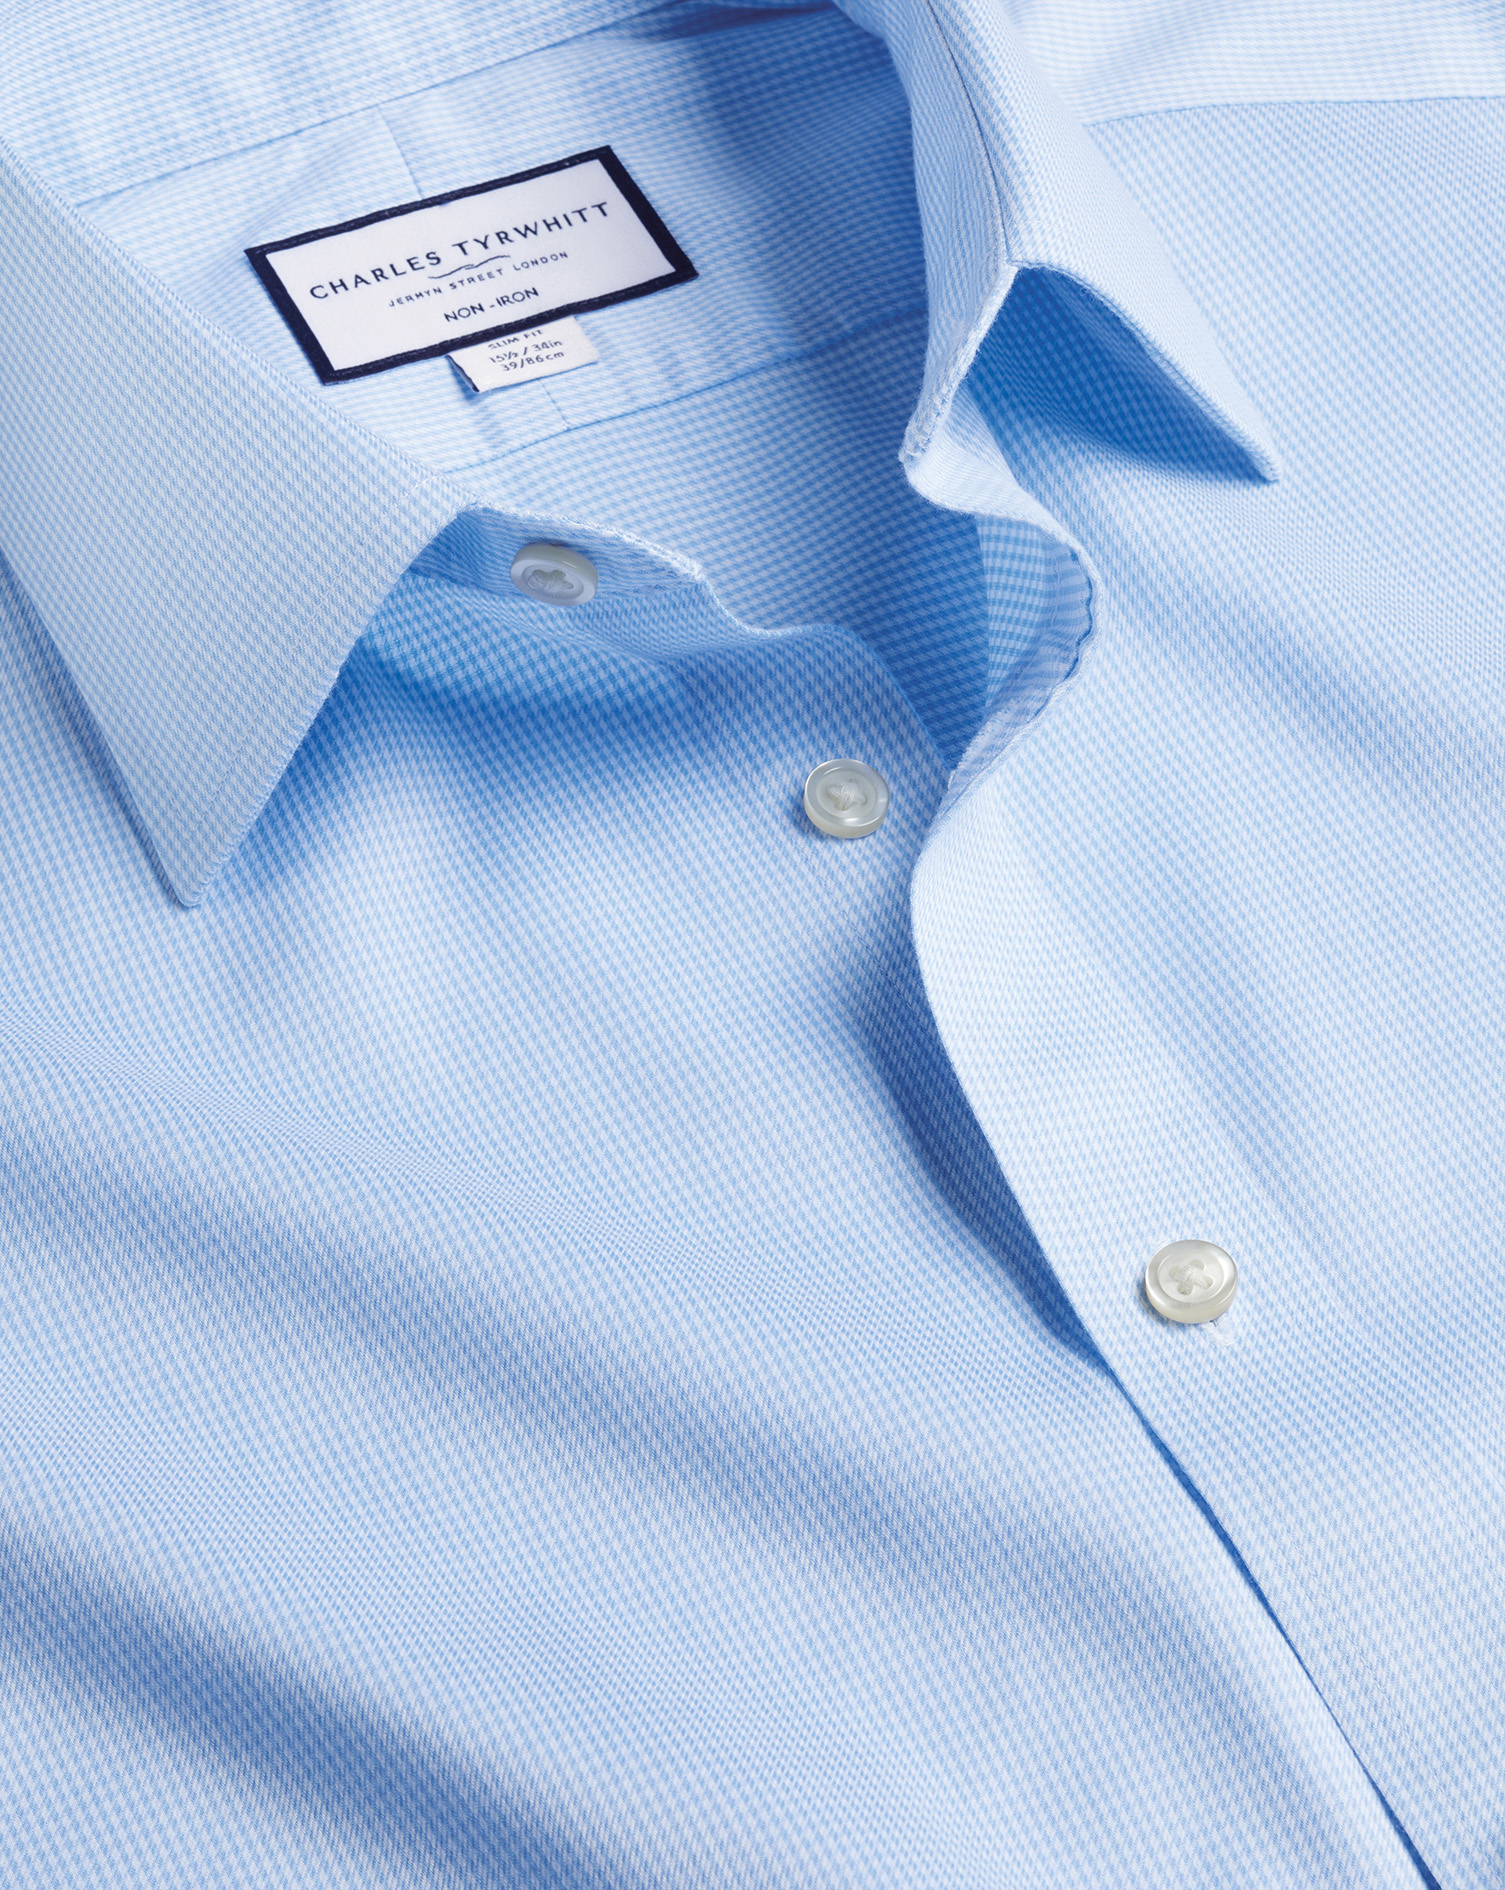 Buy Men Stripe Shirt Sky Blue White Cotton for Best Price, Reviews